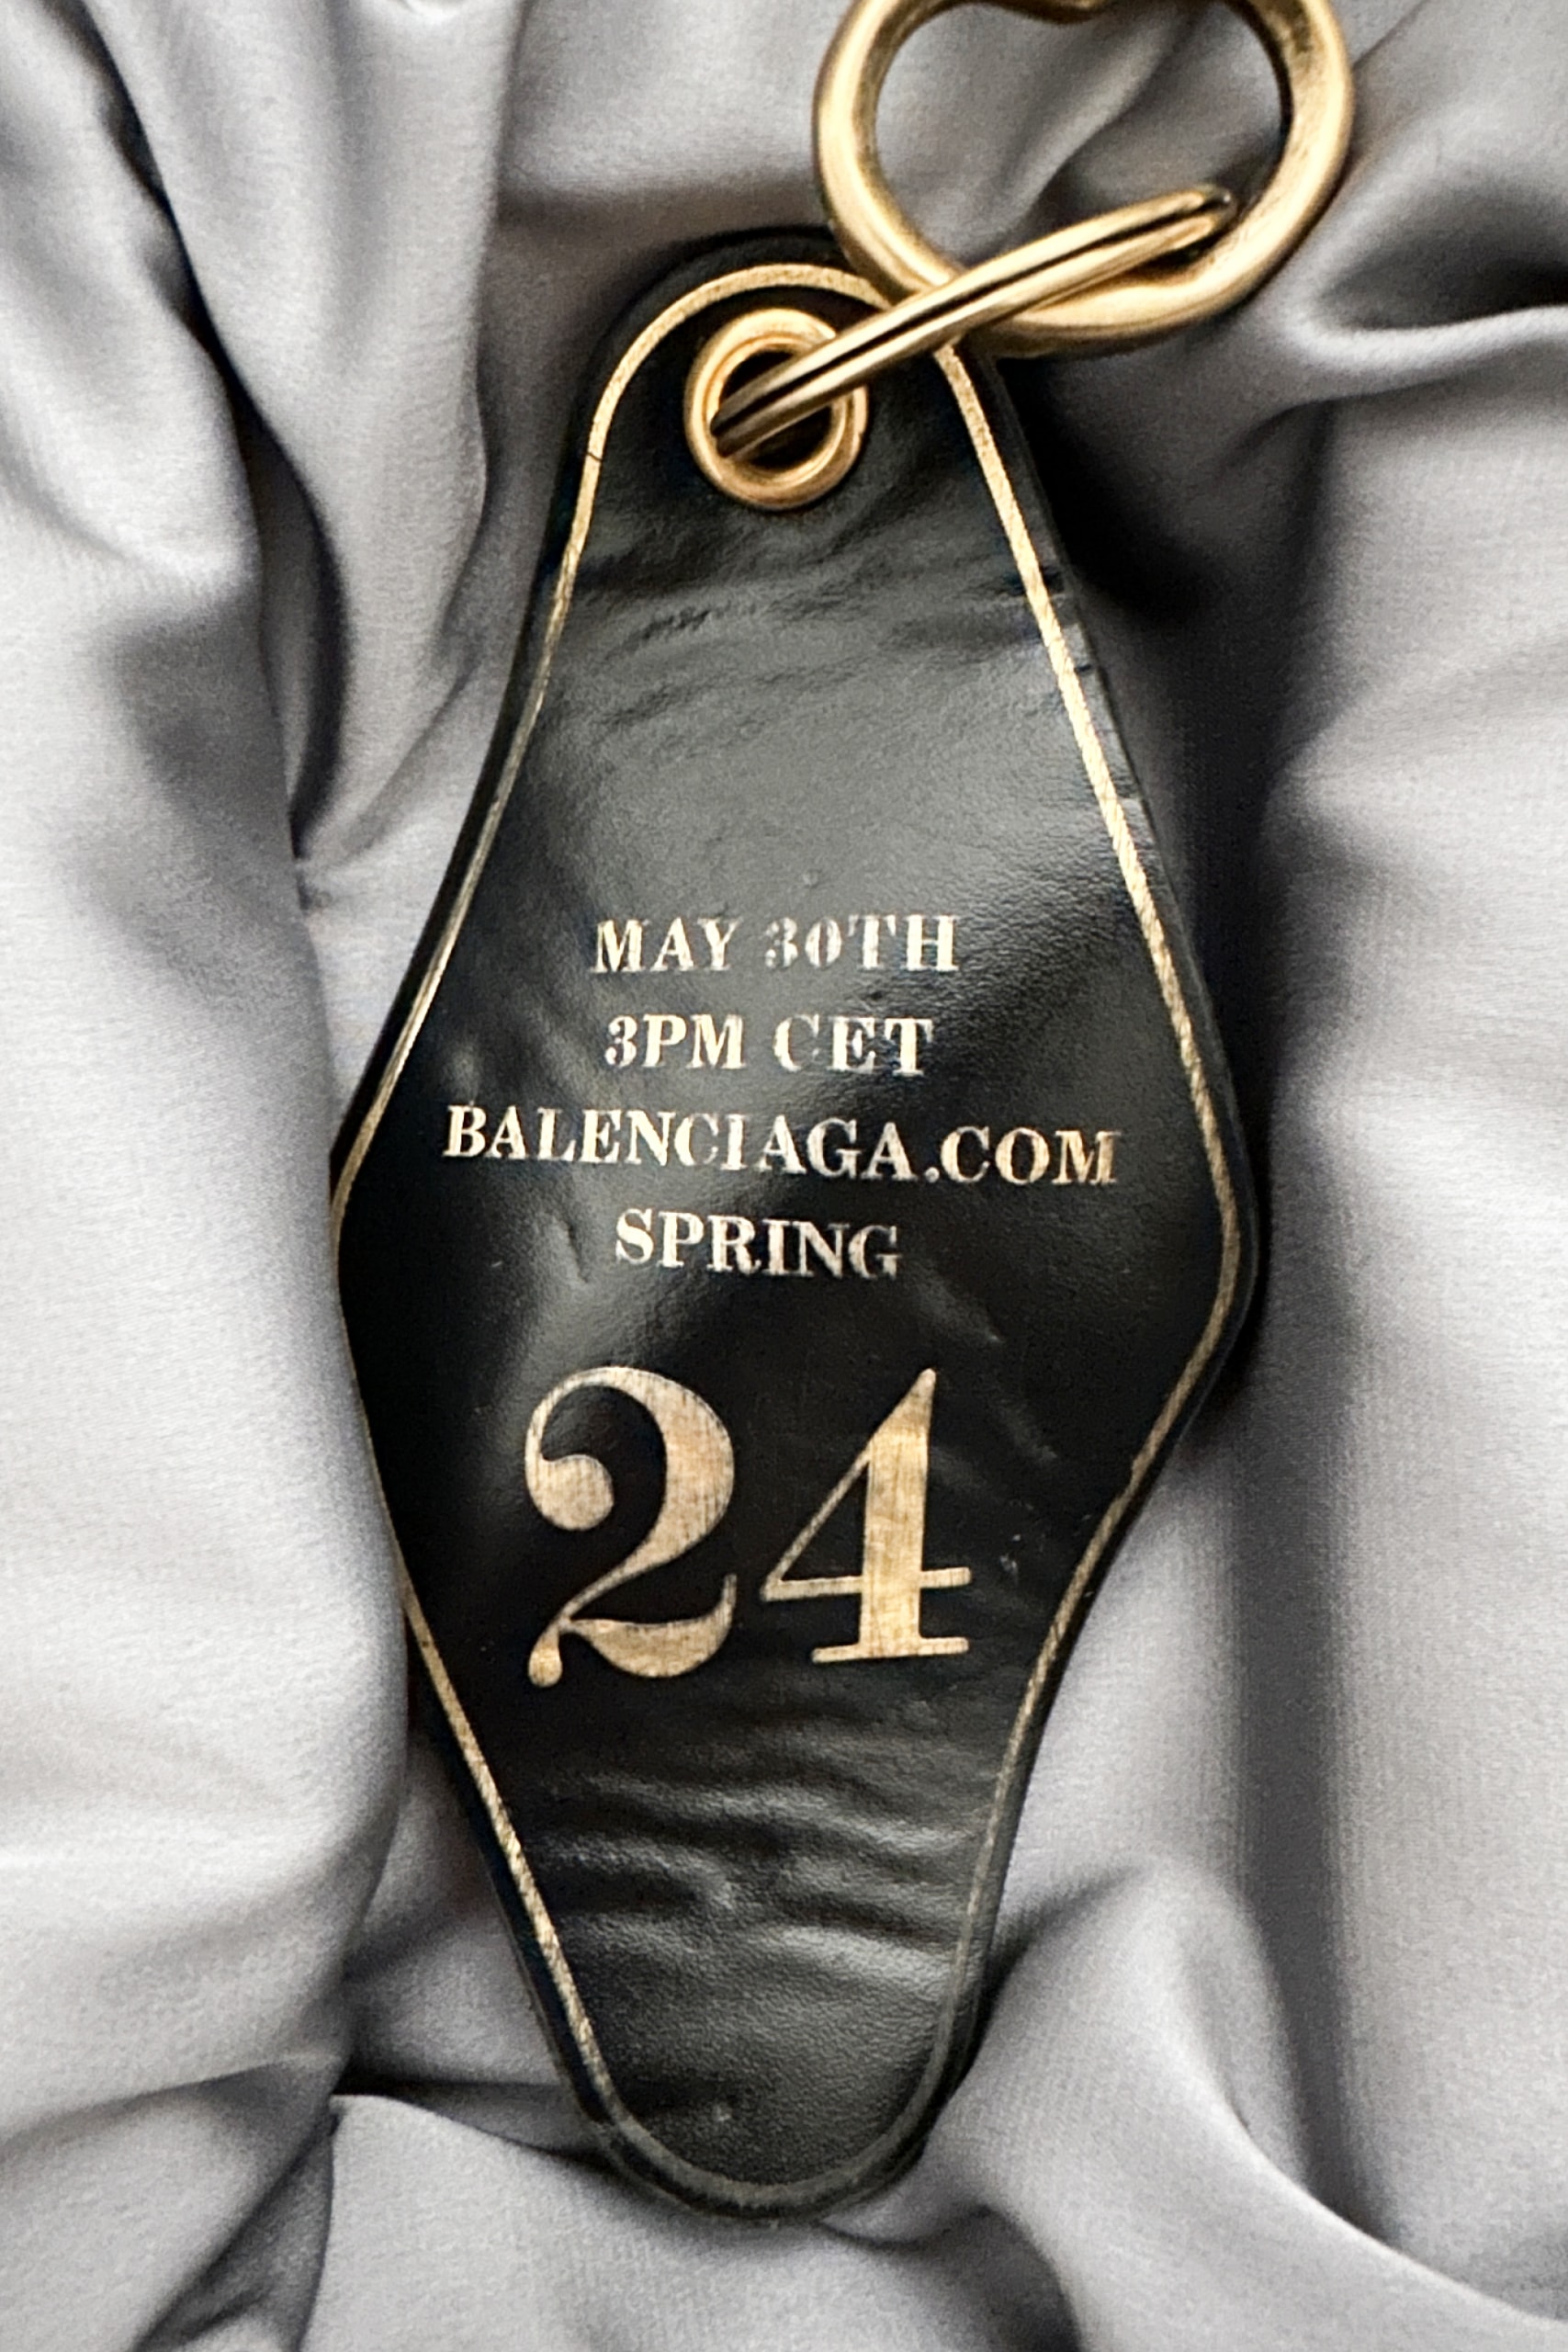 Balenciaga Spring 2024 Show Invite Invitation Key Keyring Leather Hotel Door Ring Gold Demna Digital 10 Avenue George V Paris France May 30